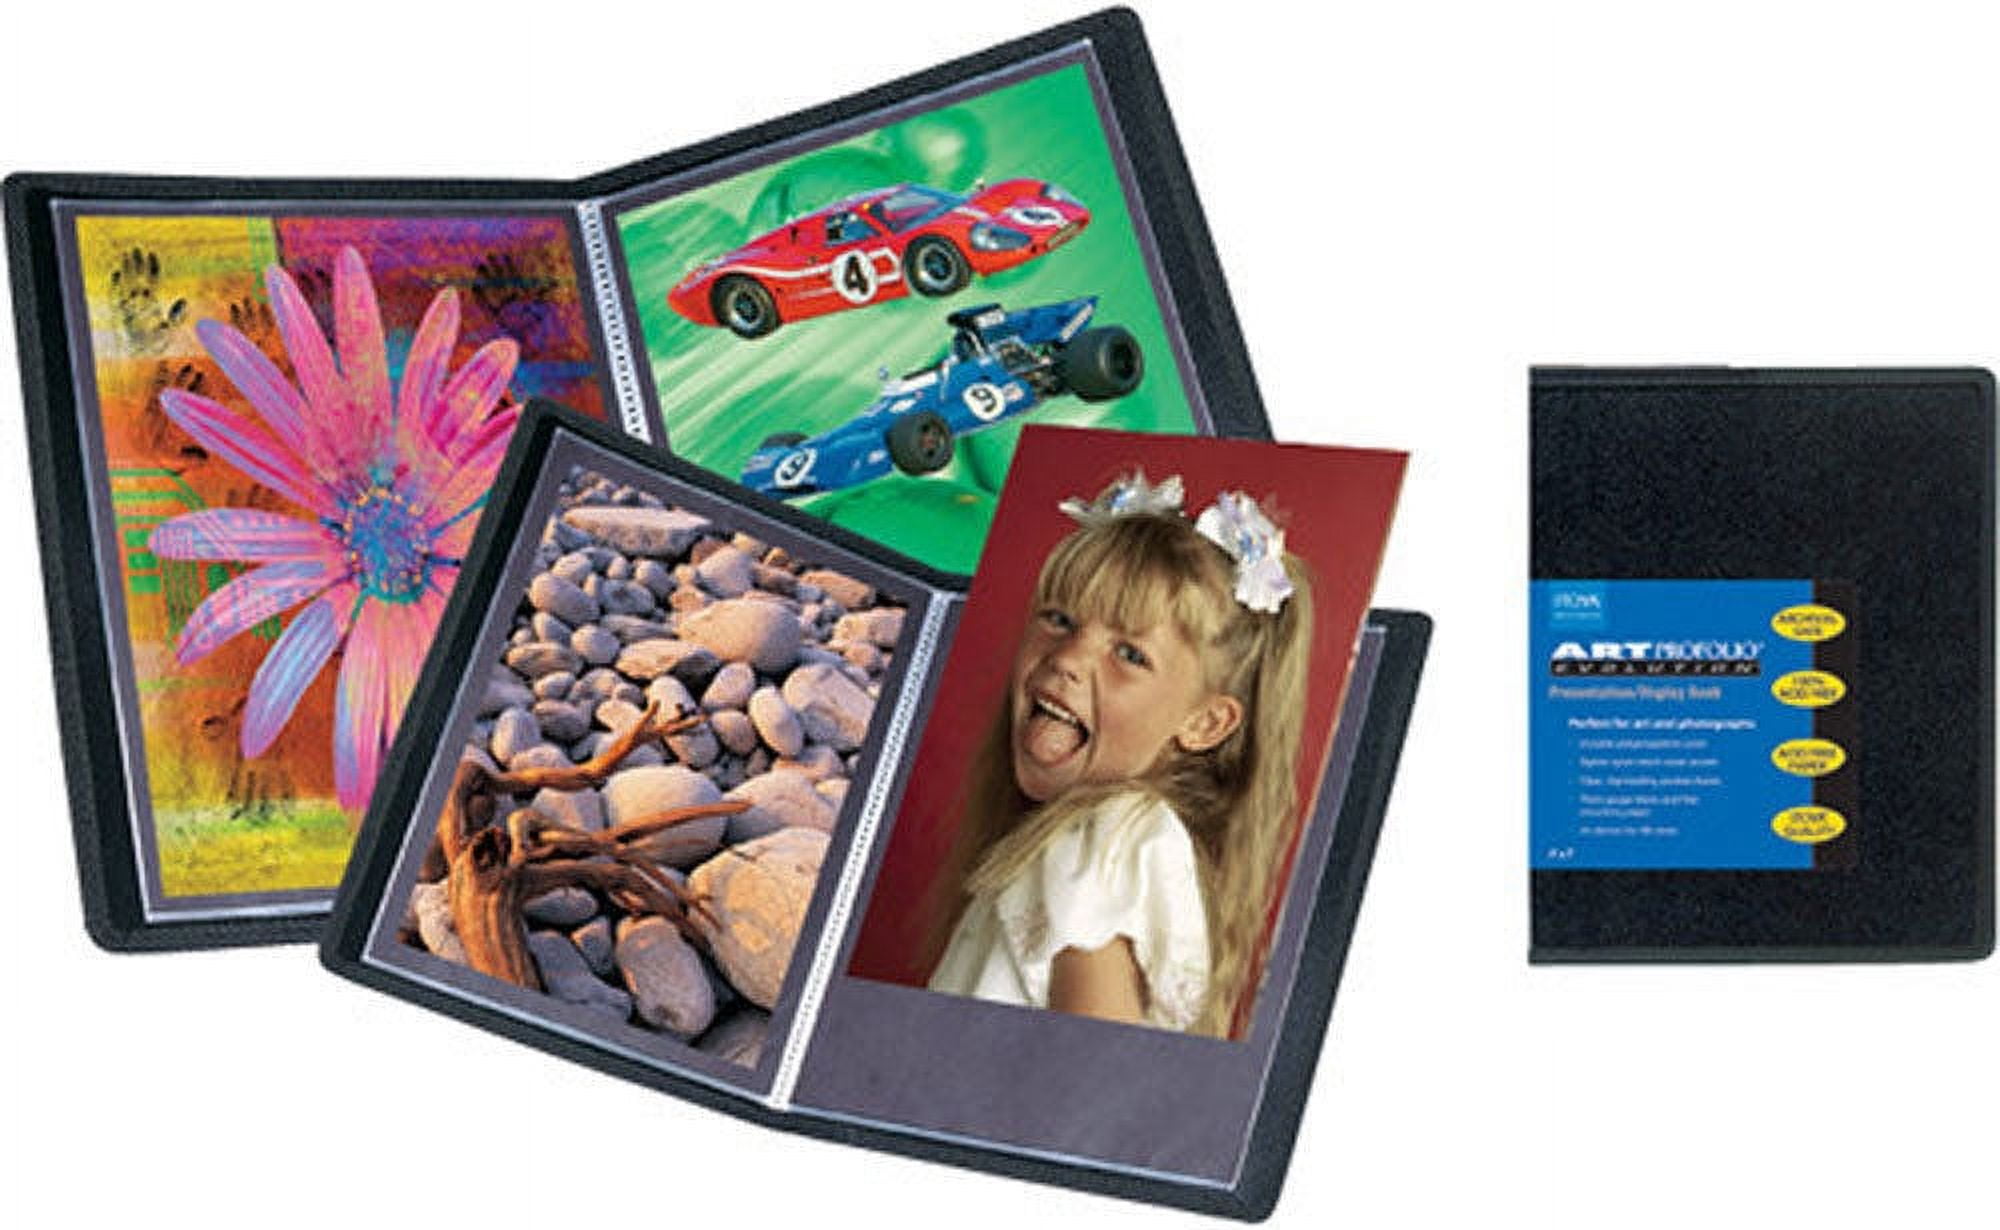 11X17 Portfolio Folder for Artwork - (Black) Large Art Portfolio Folder  with 24 Plastic Sleeves, Presentation Folder or Art Portfolio Binder for  Photography, Keepsake Portfolio for Kids Art